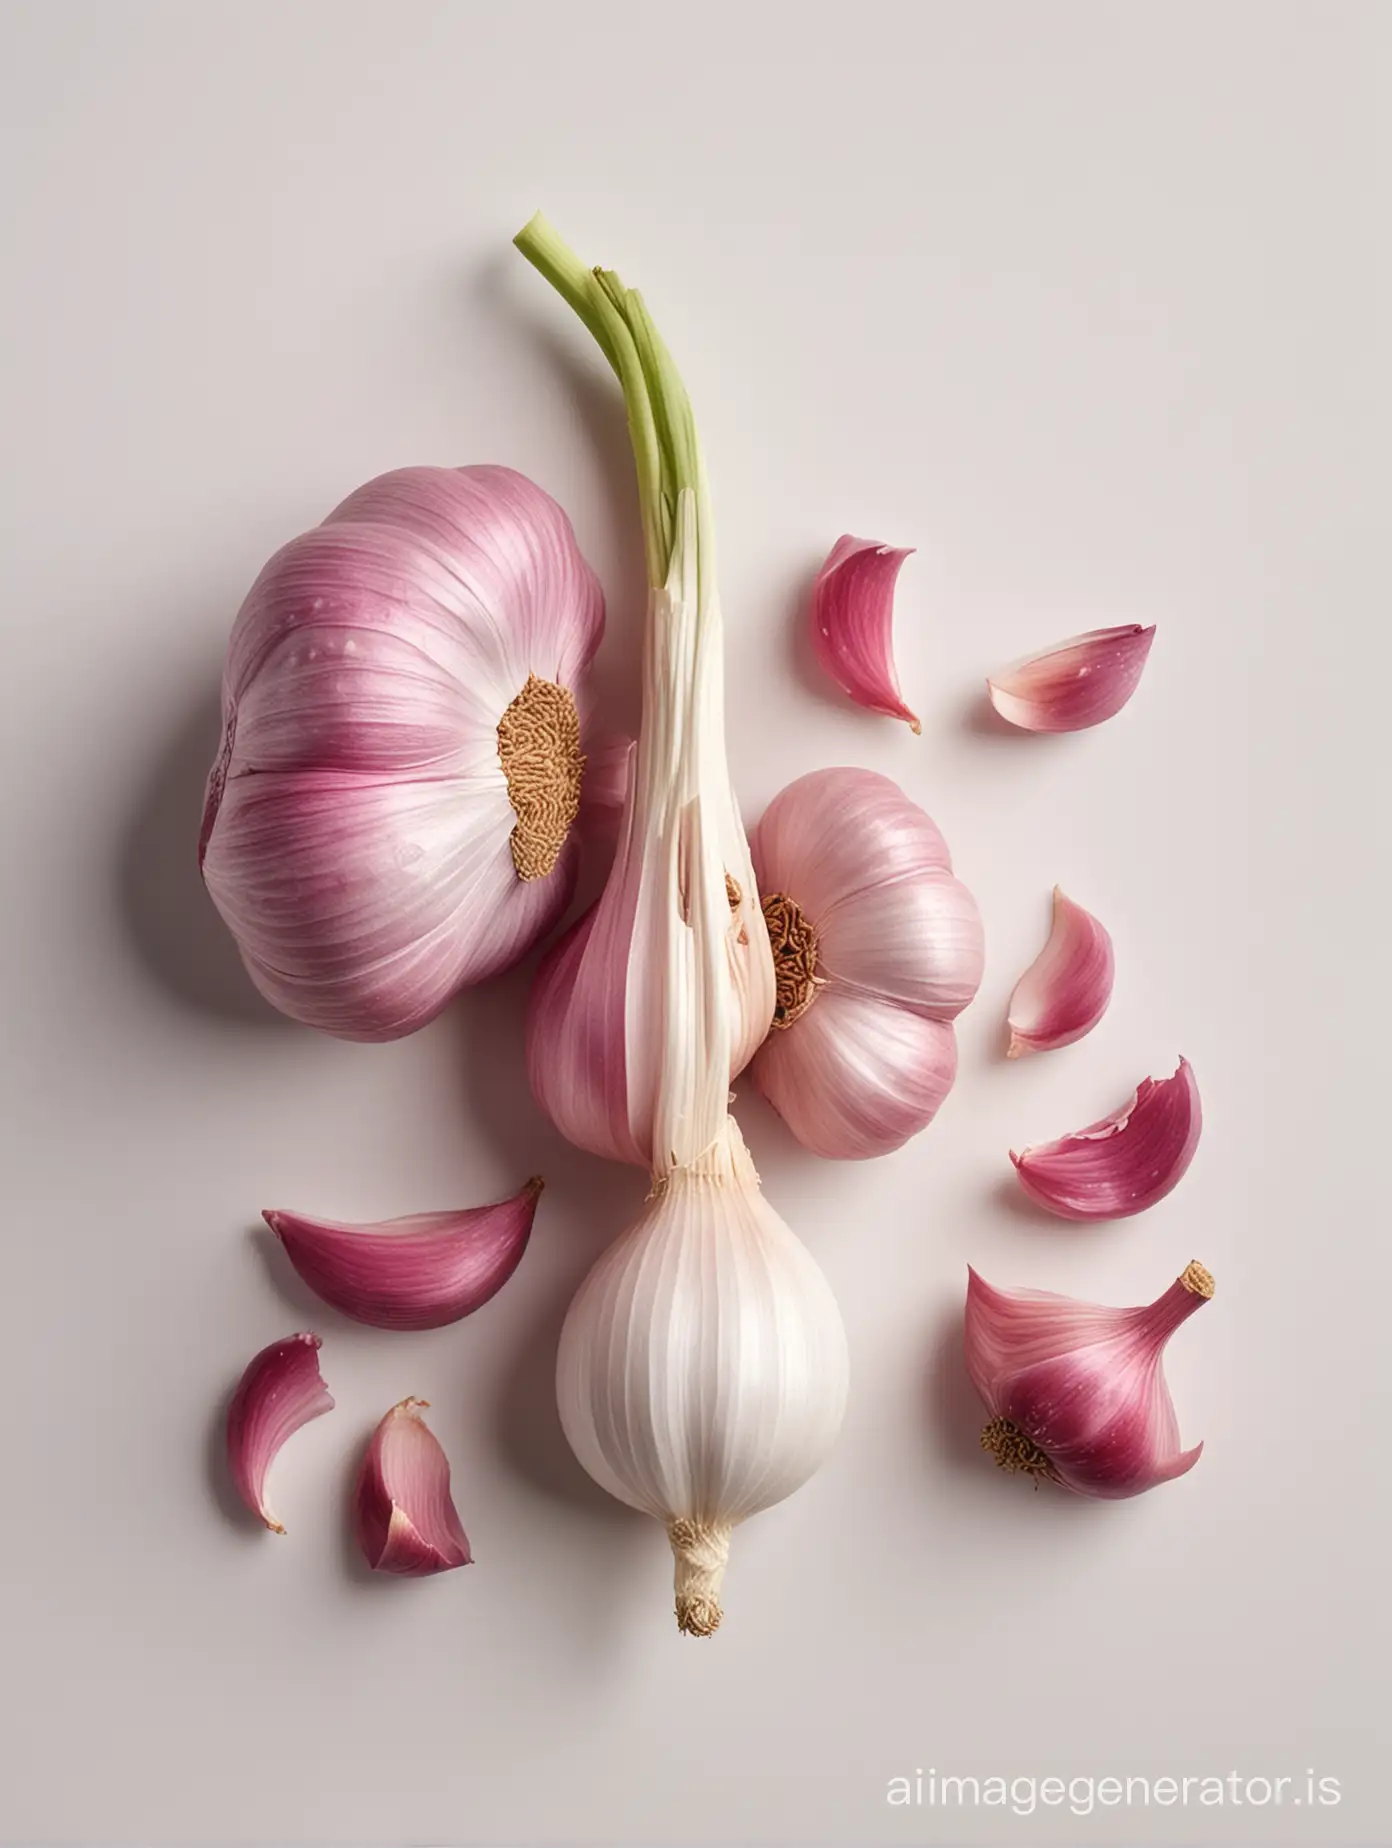 Medieval-Style-Pink-Garlic-Clove-on-White-Background